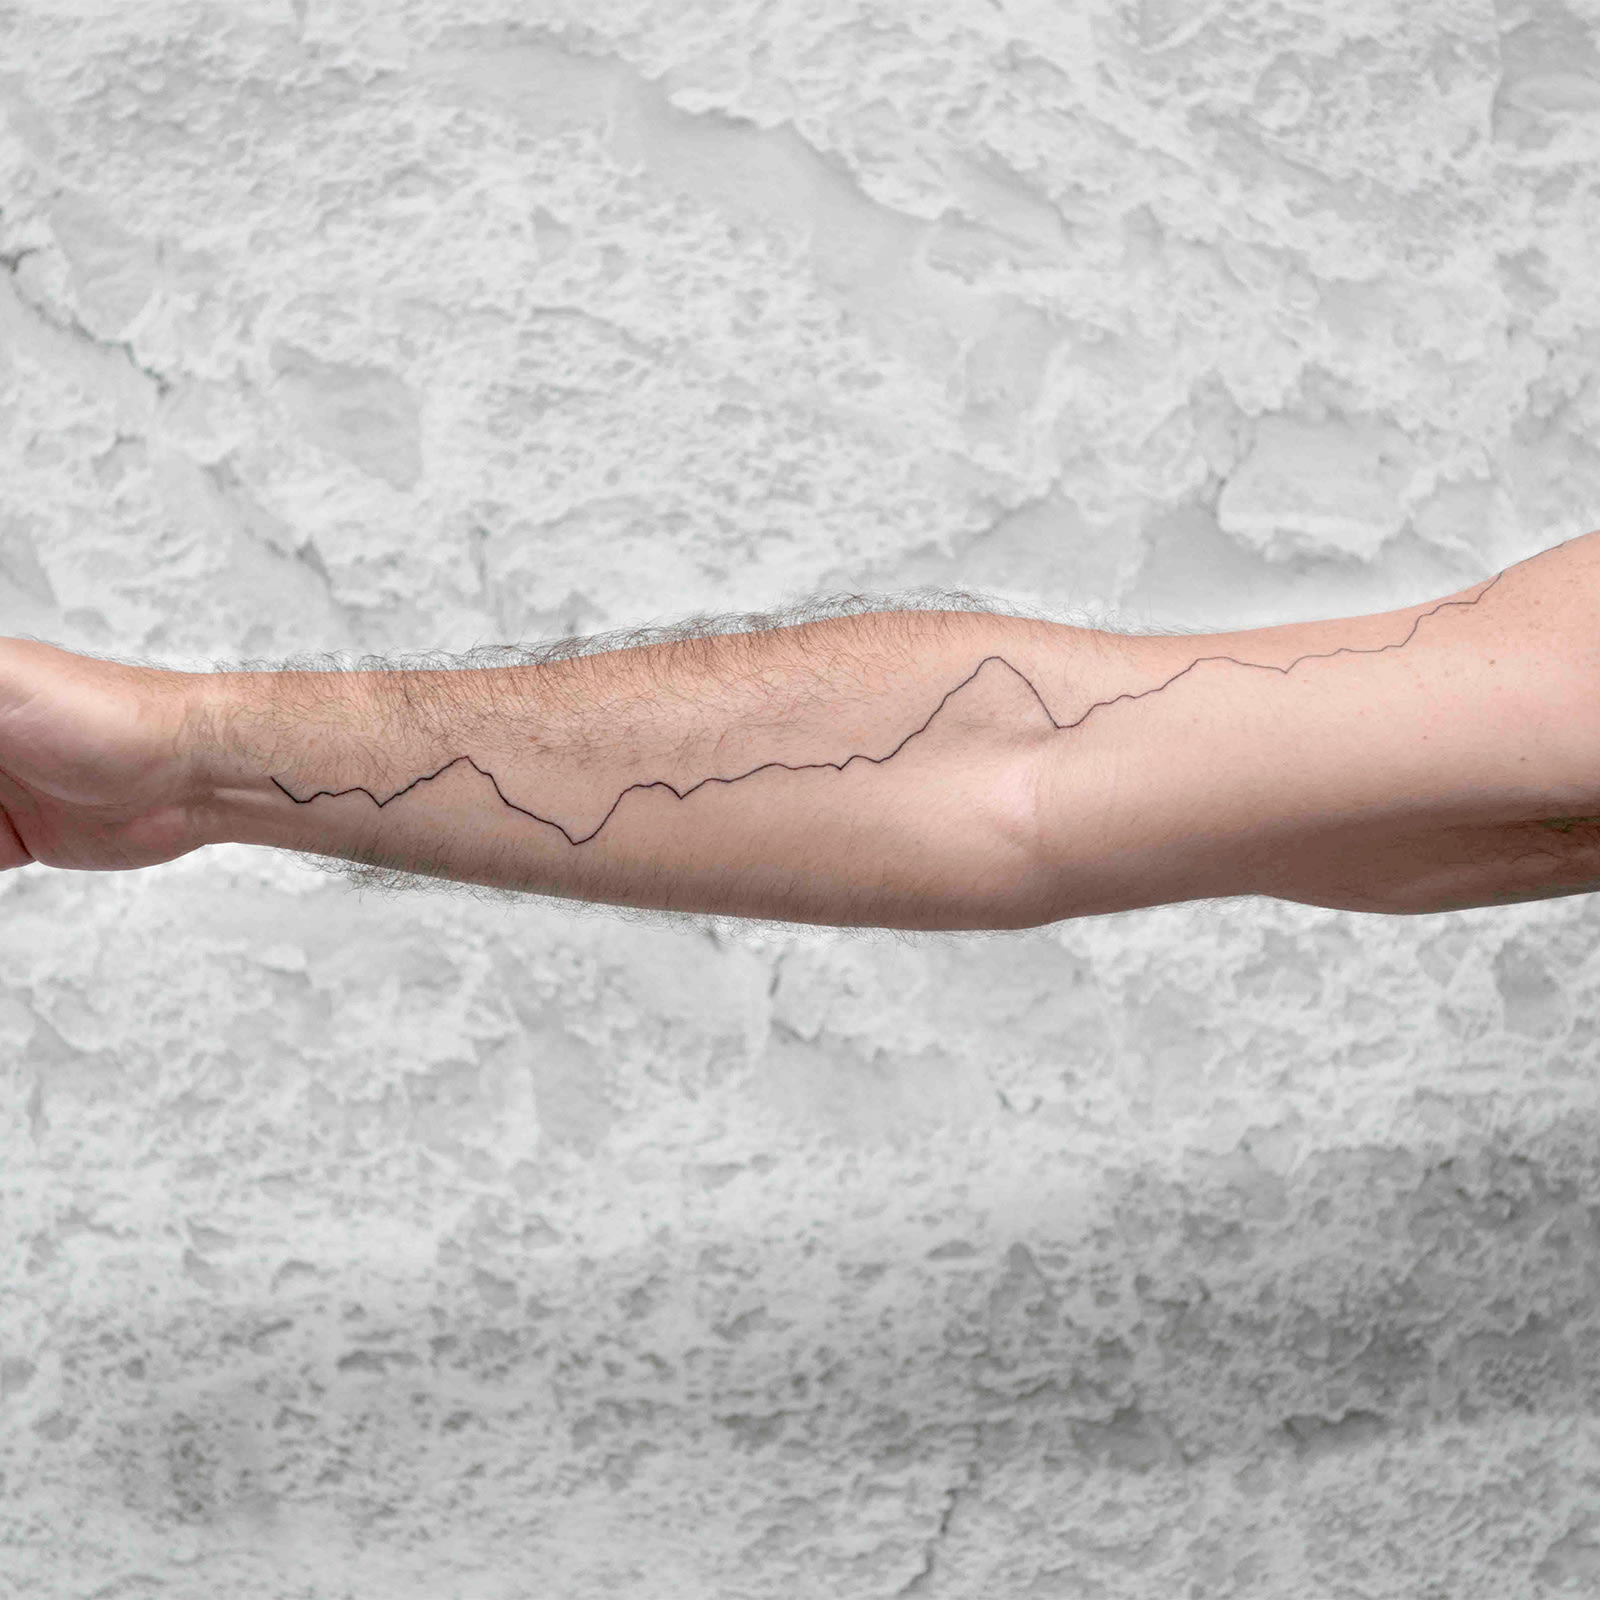 Justin Brice Guariglia's arm tatoo